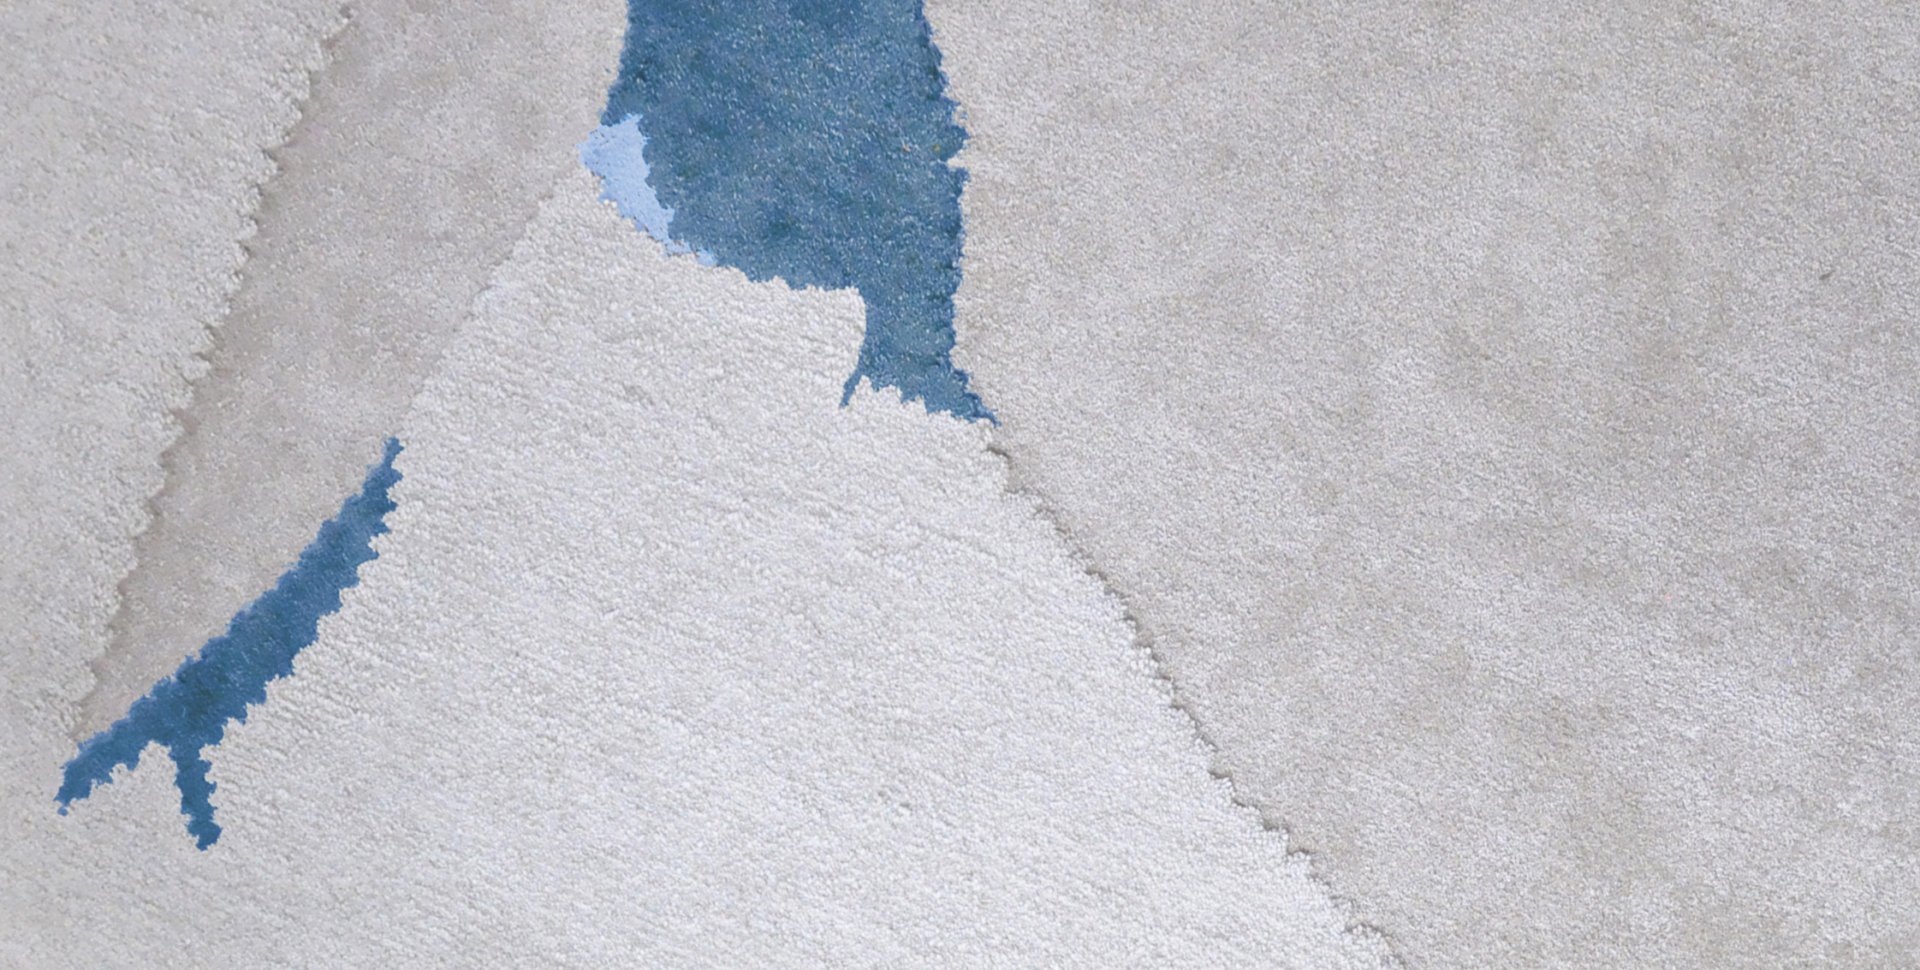 Printemps Carpet by Borella Art Design